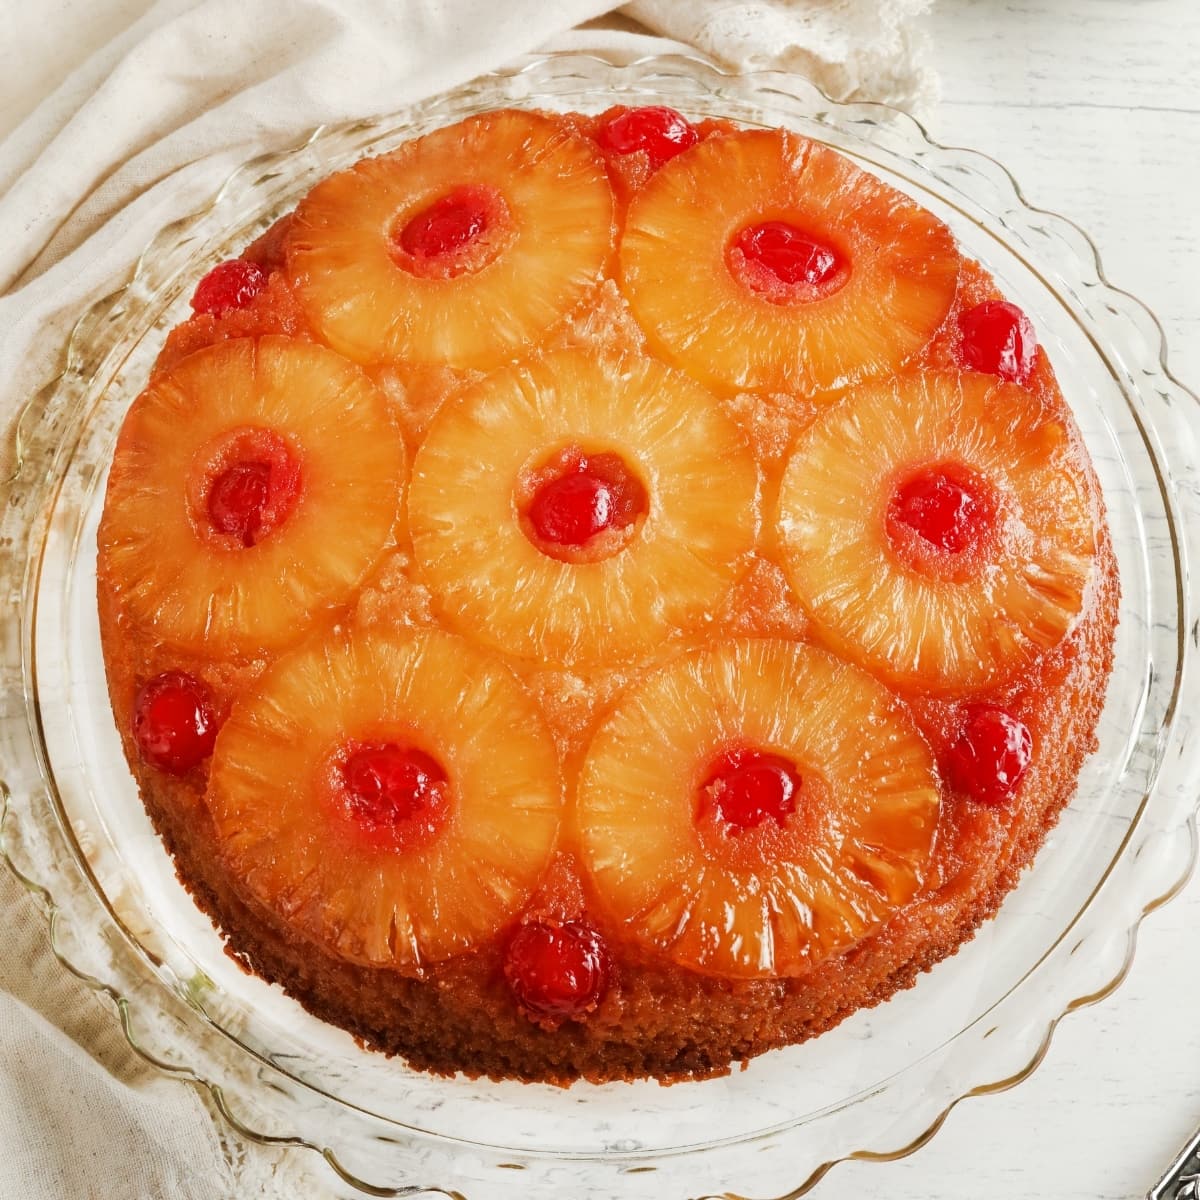 Share more than 125 betty crocker sunshine cake latest - awesomeenglish ...